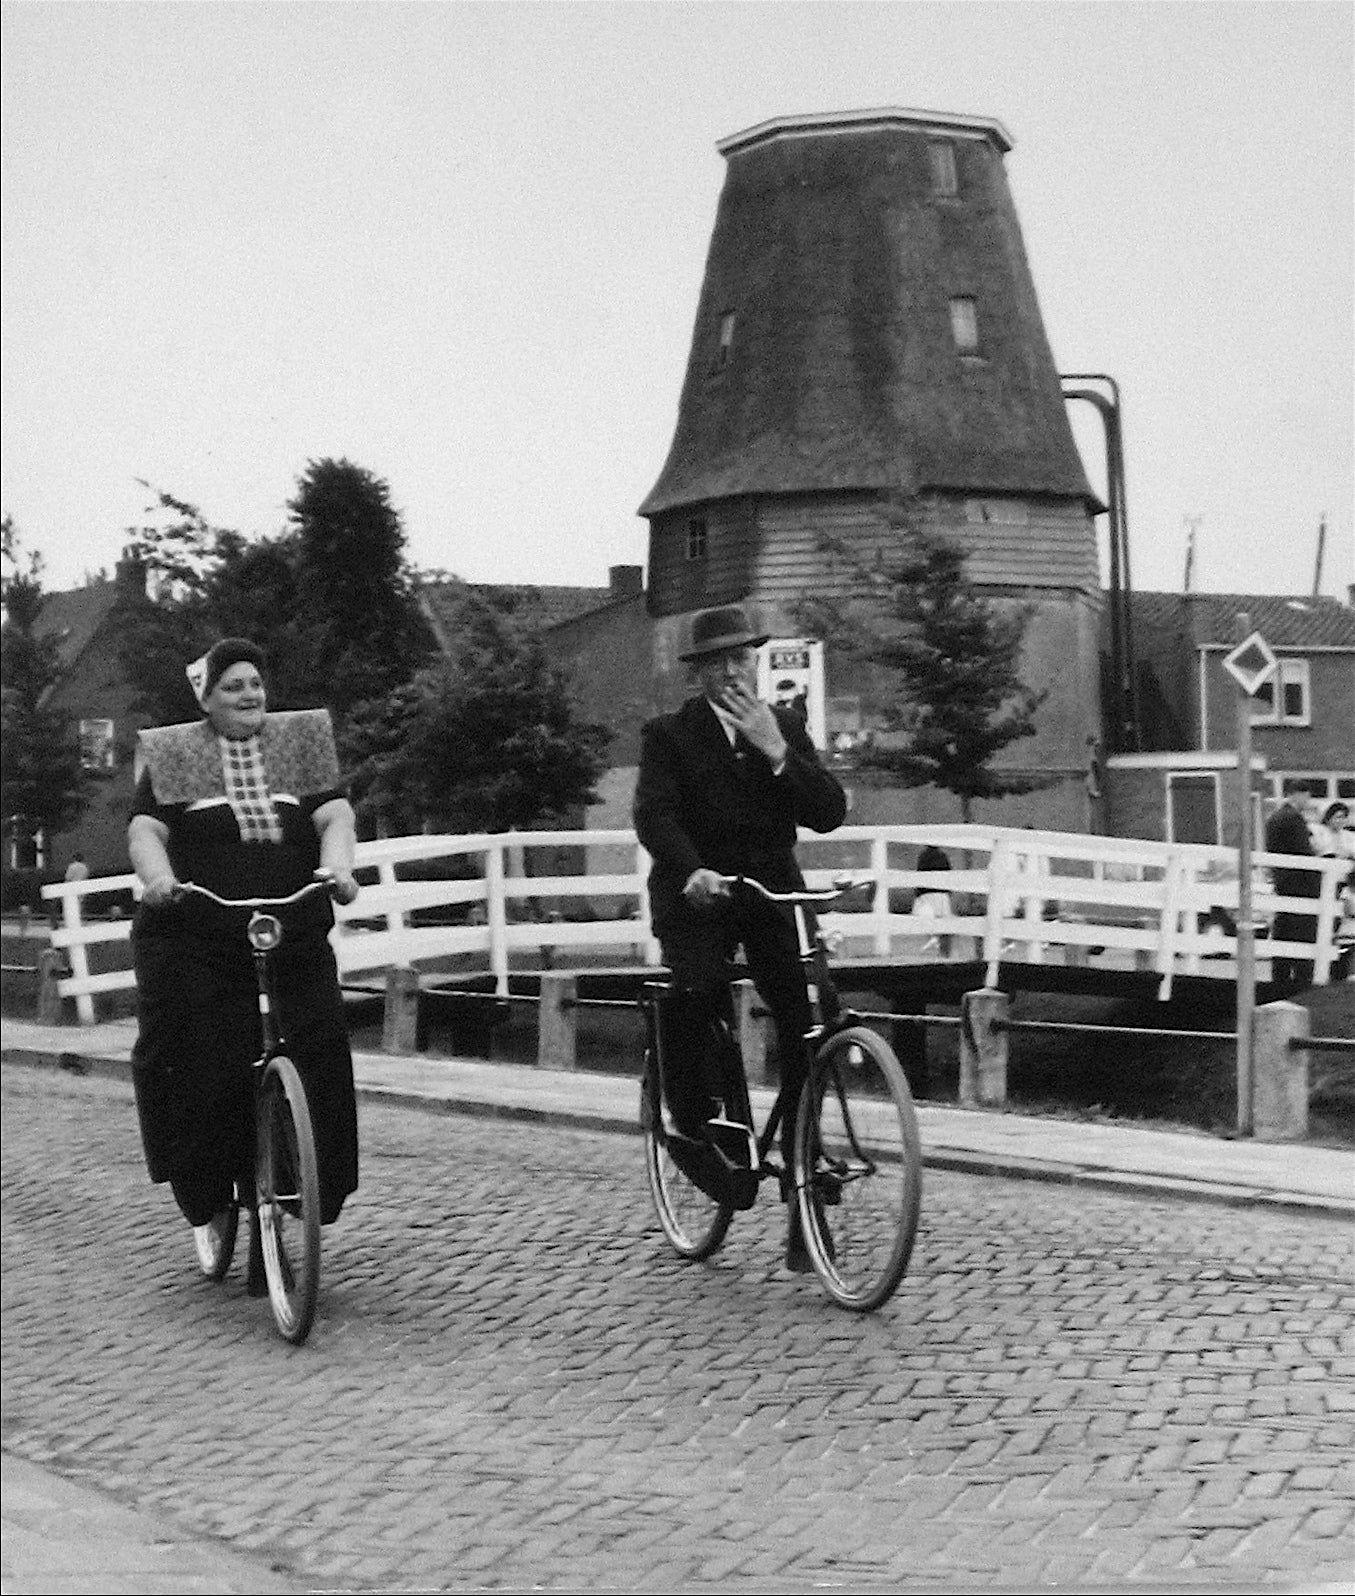 Those Dutch Days <br>1960s Photograph <br><br>#12154